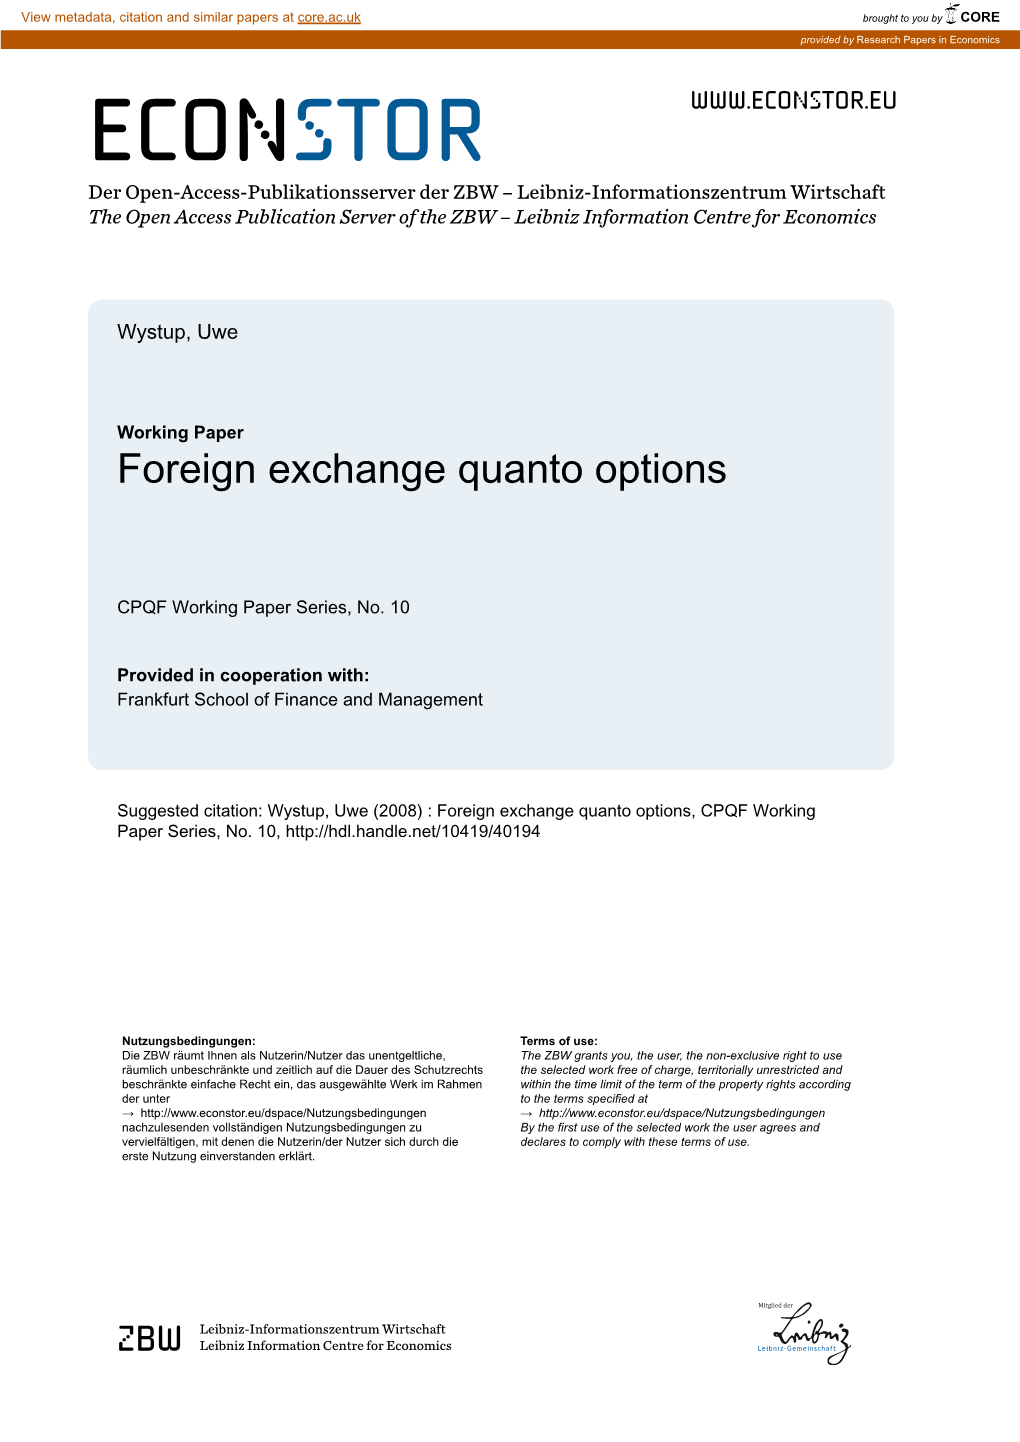 Foreign Exchange Quanto Options